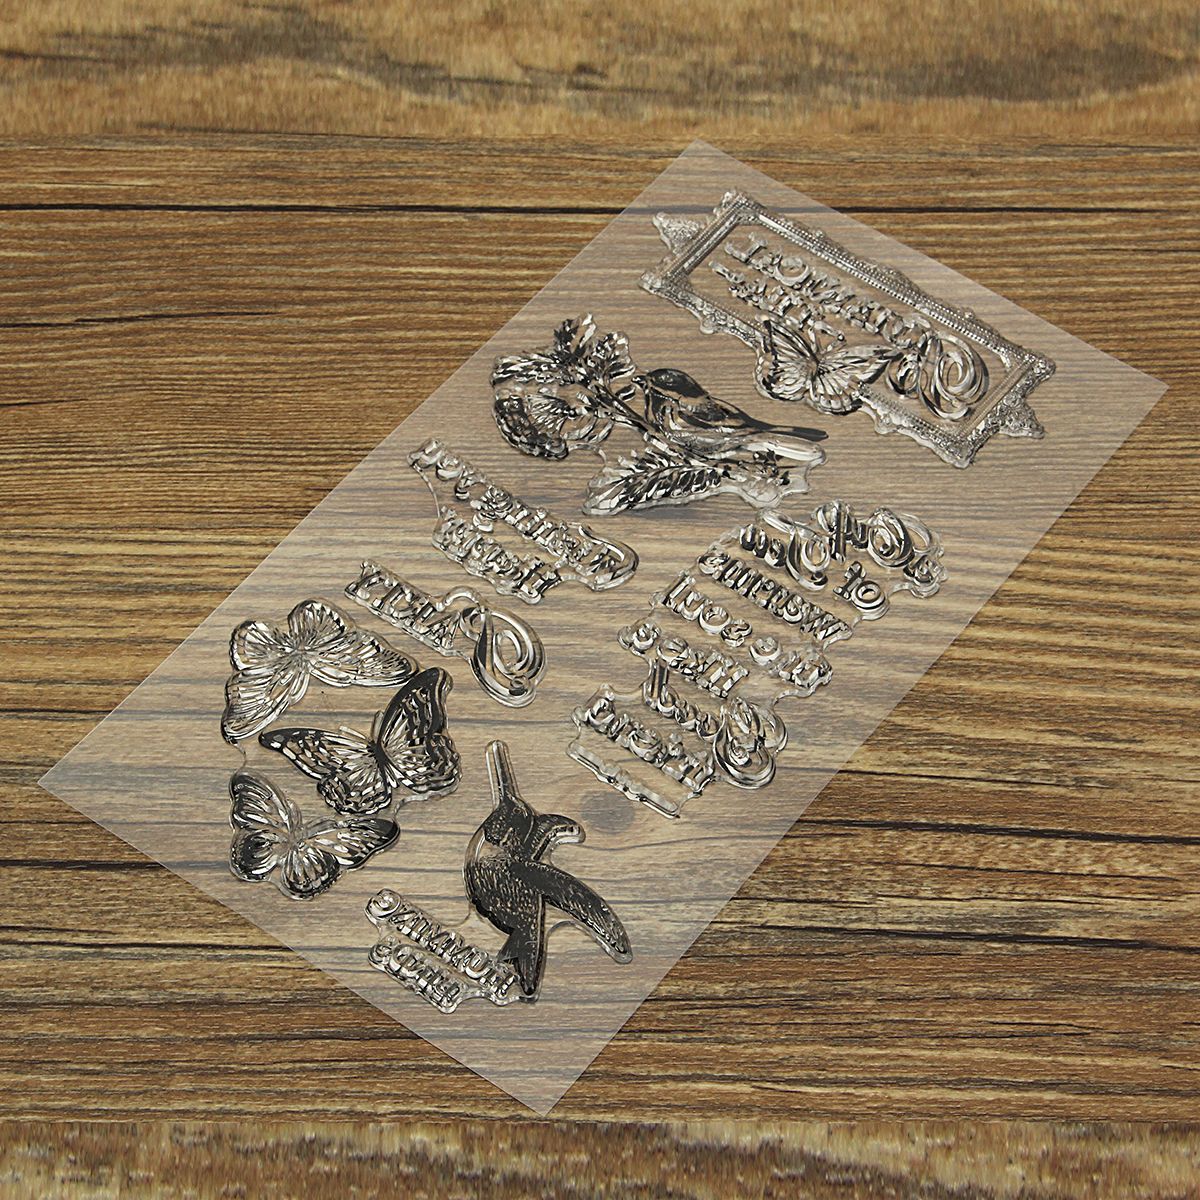 Sheet-Silicone-Transparent-Stamp-Seal-DIY-Scrapbooking-Album-Decor-Craft-20x11cm-1132312